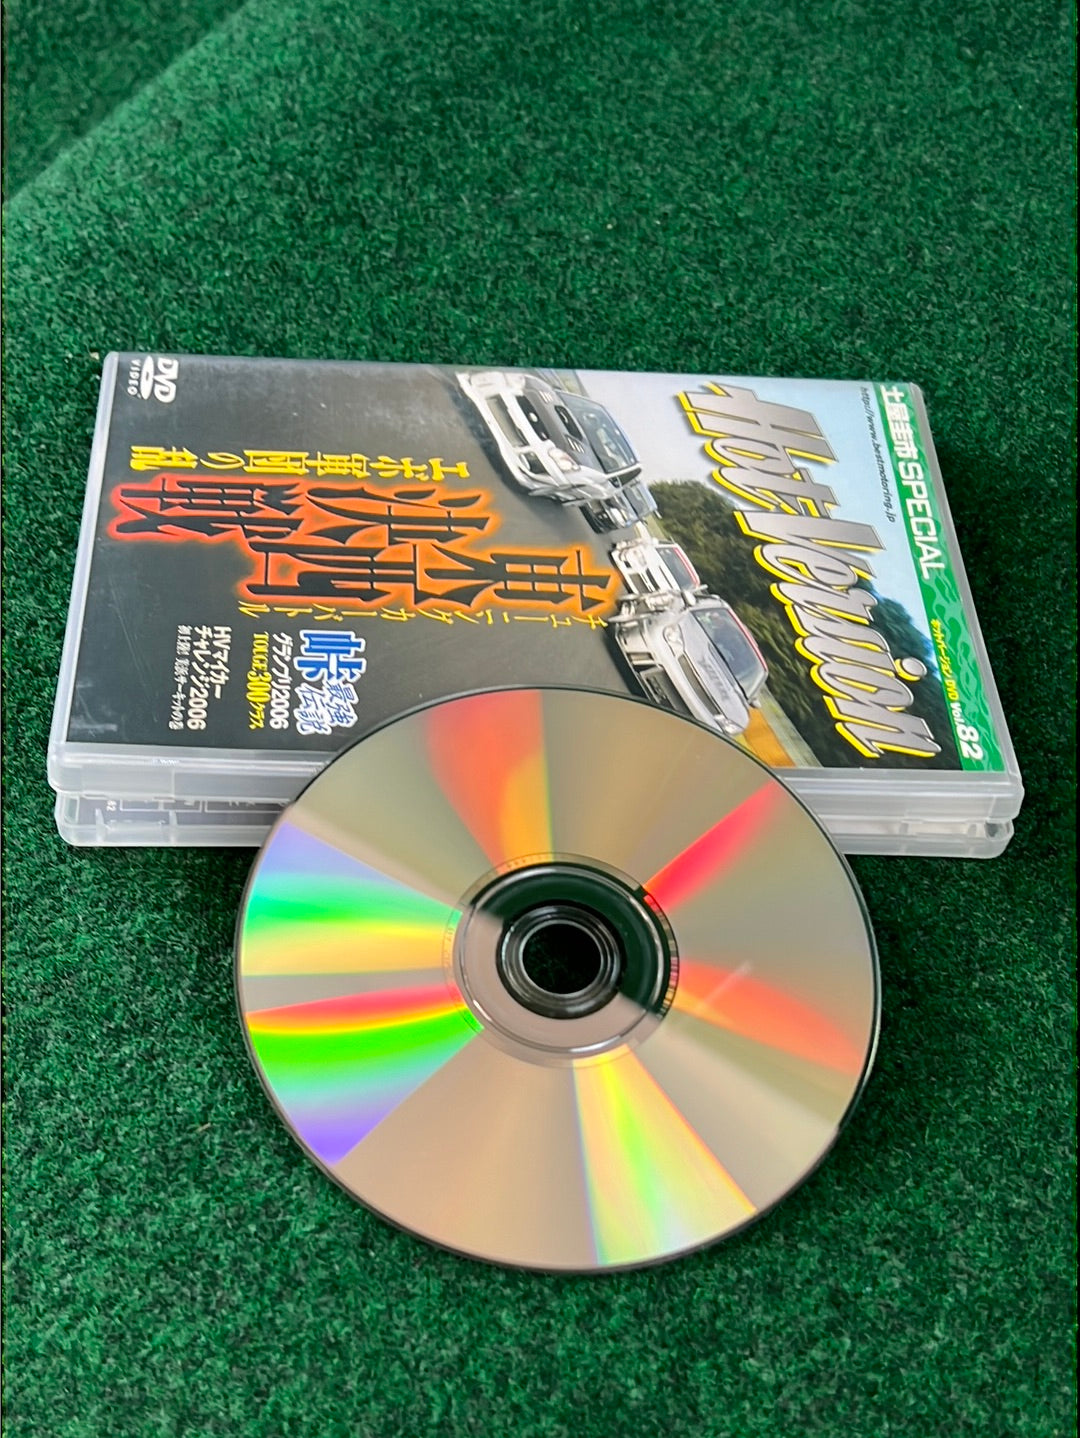 Hot Version DVD - Vol. 82